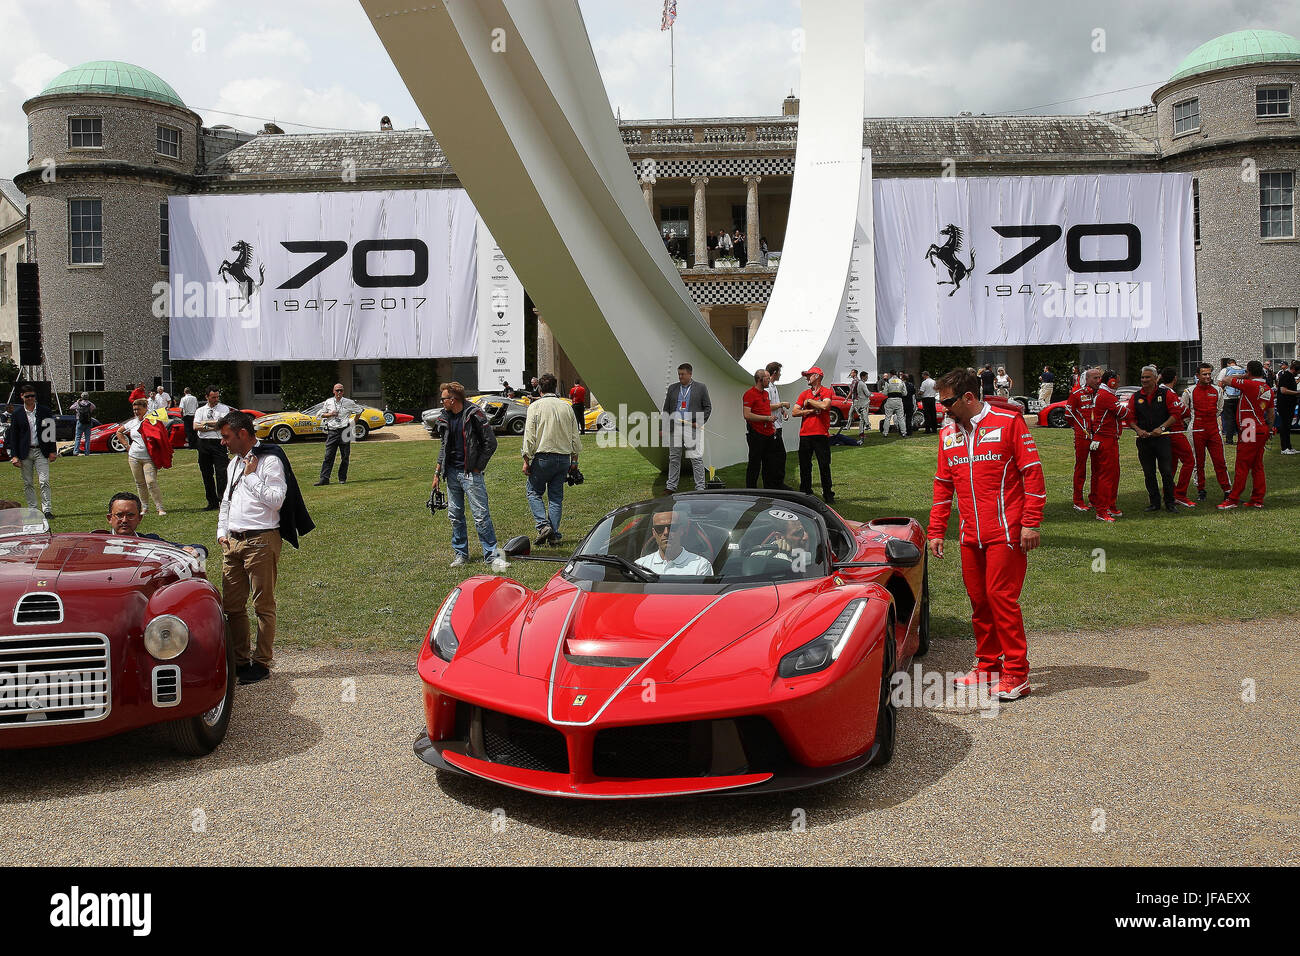 Goodwood, UK. 30. Juni 2017. Ferrari 70. Jubiläum Credit: Malcolm Greig/Alamy Live News Stockfoto